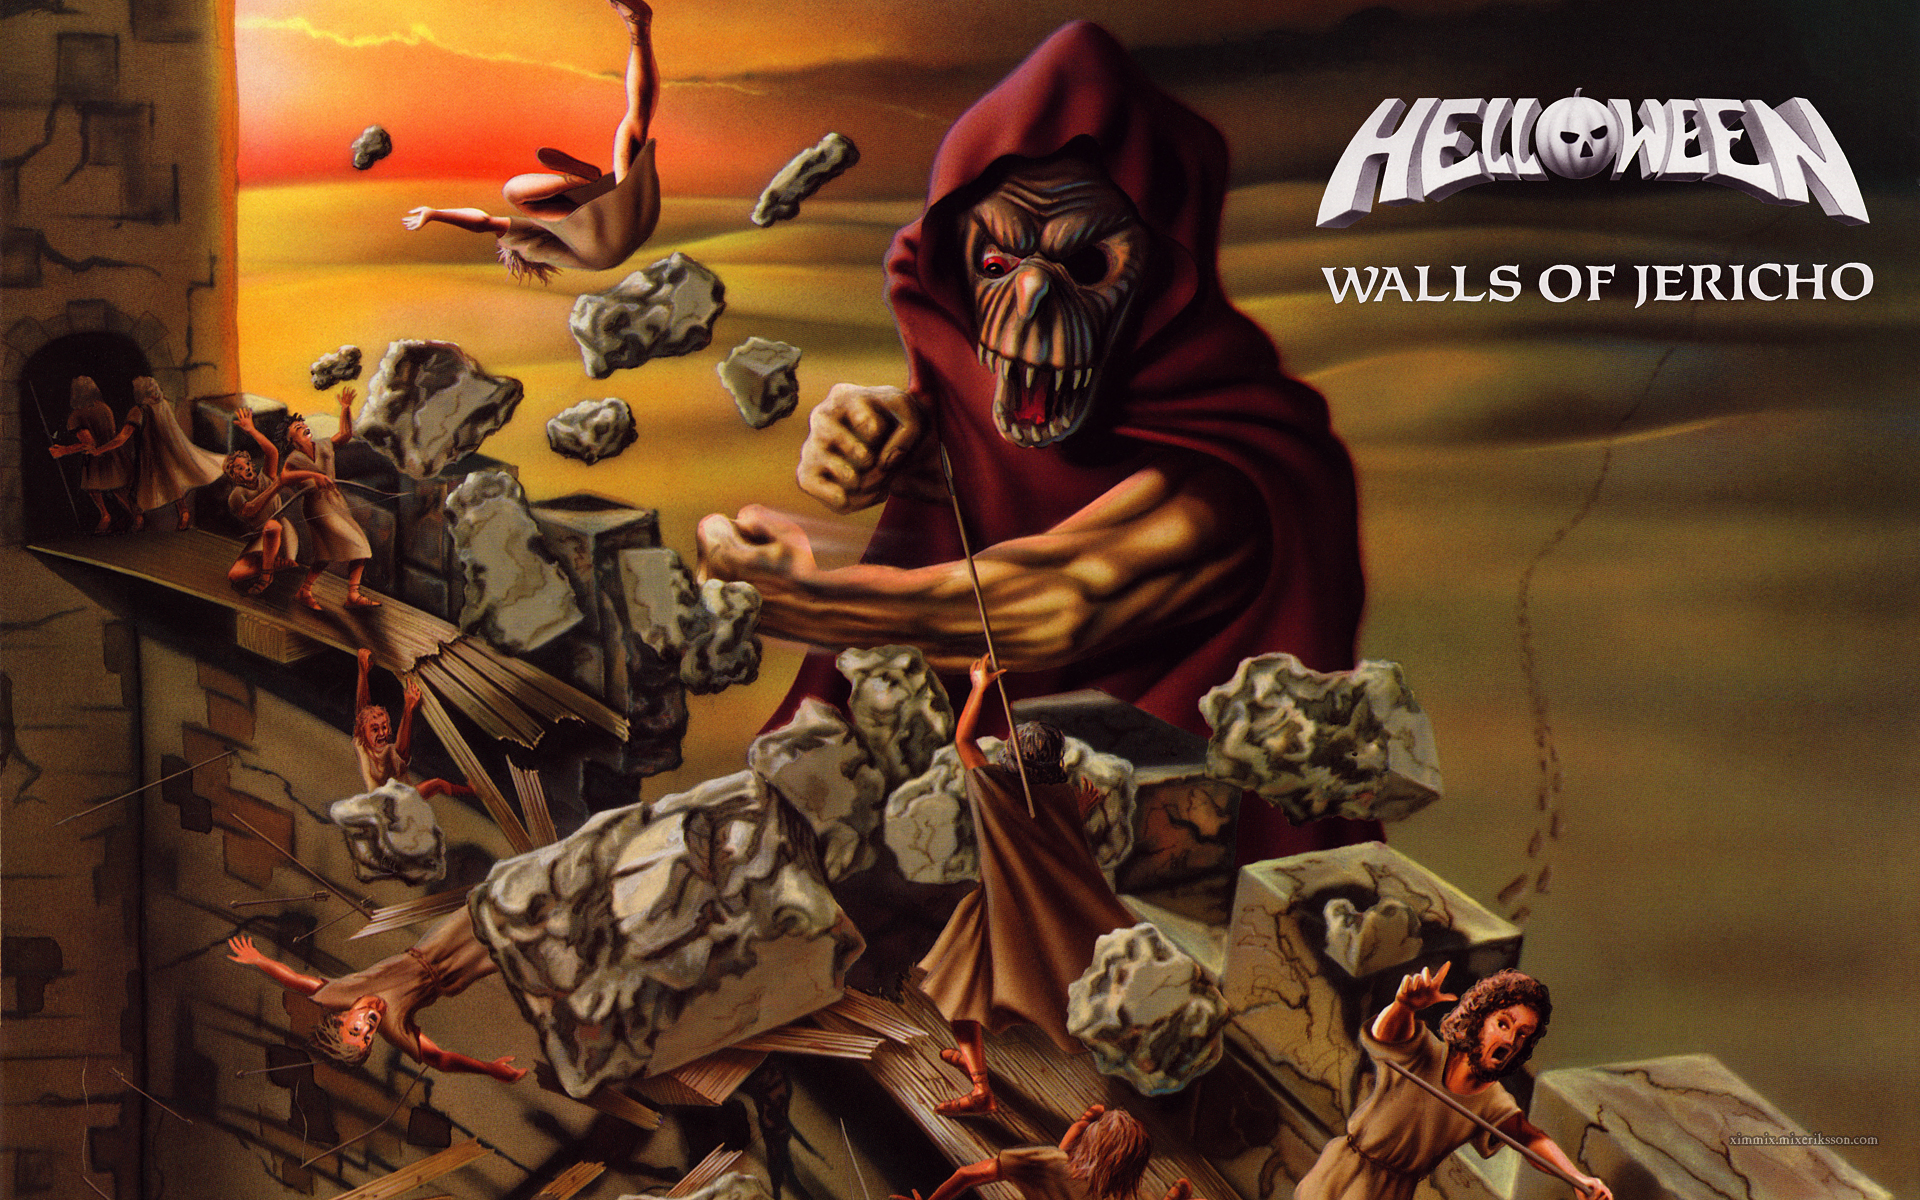 Classic Rock Album Covers Wallpaper Music Helloween